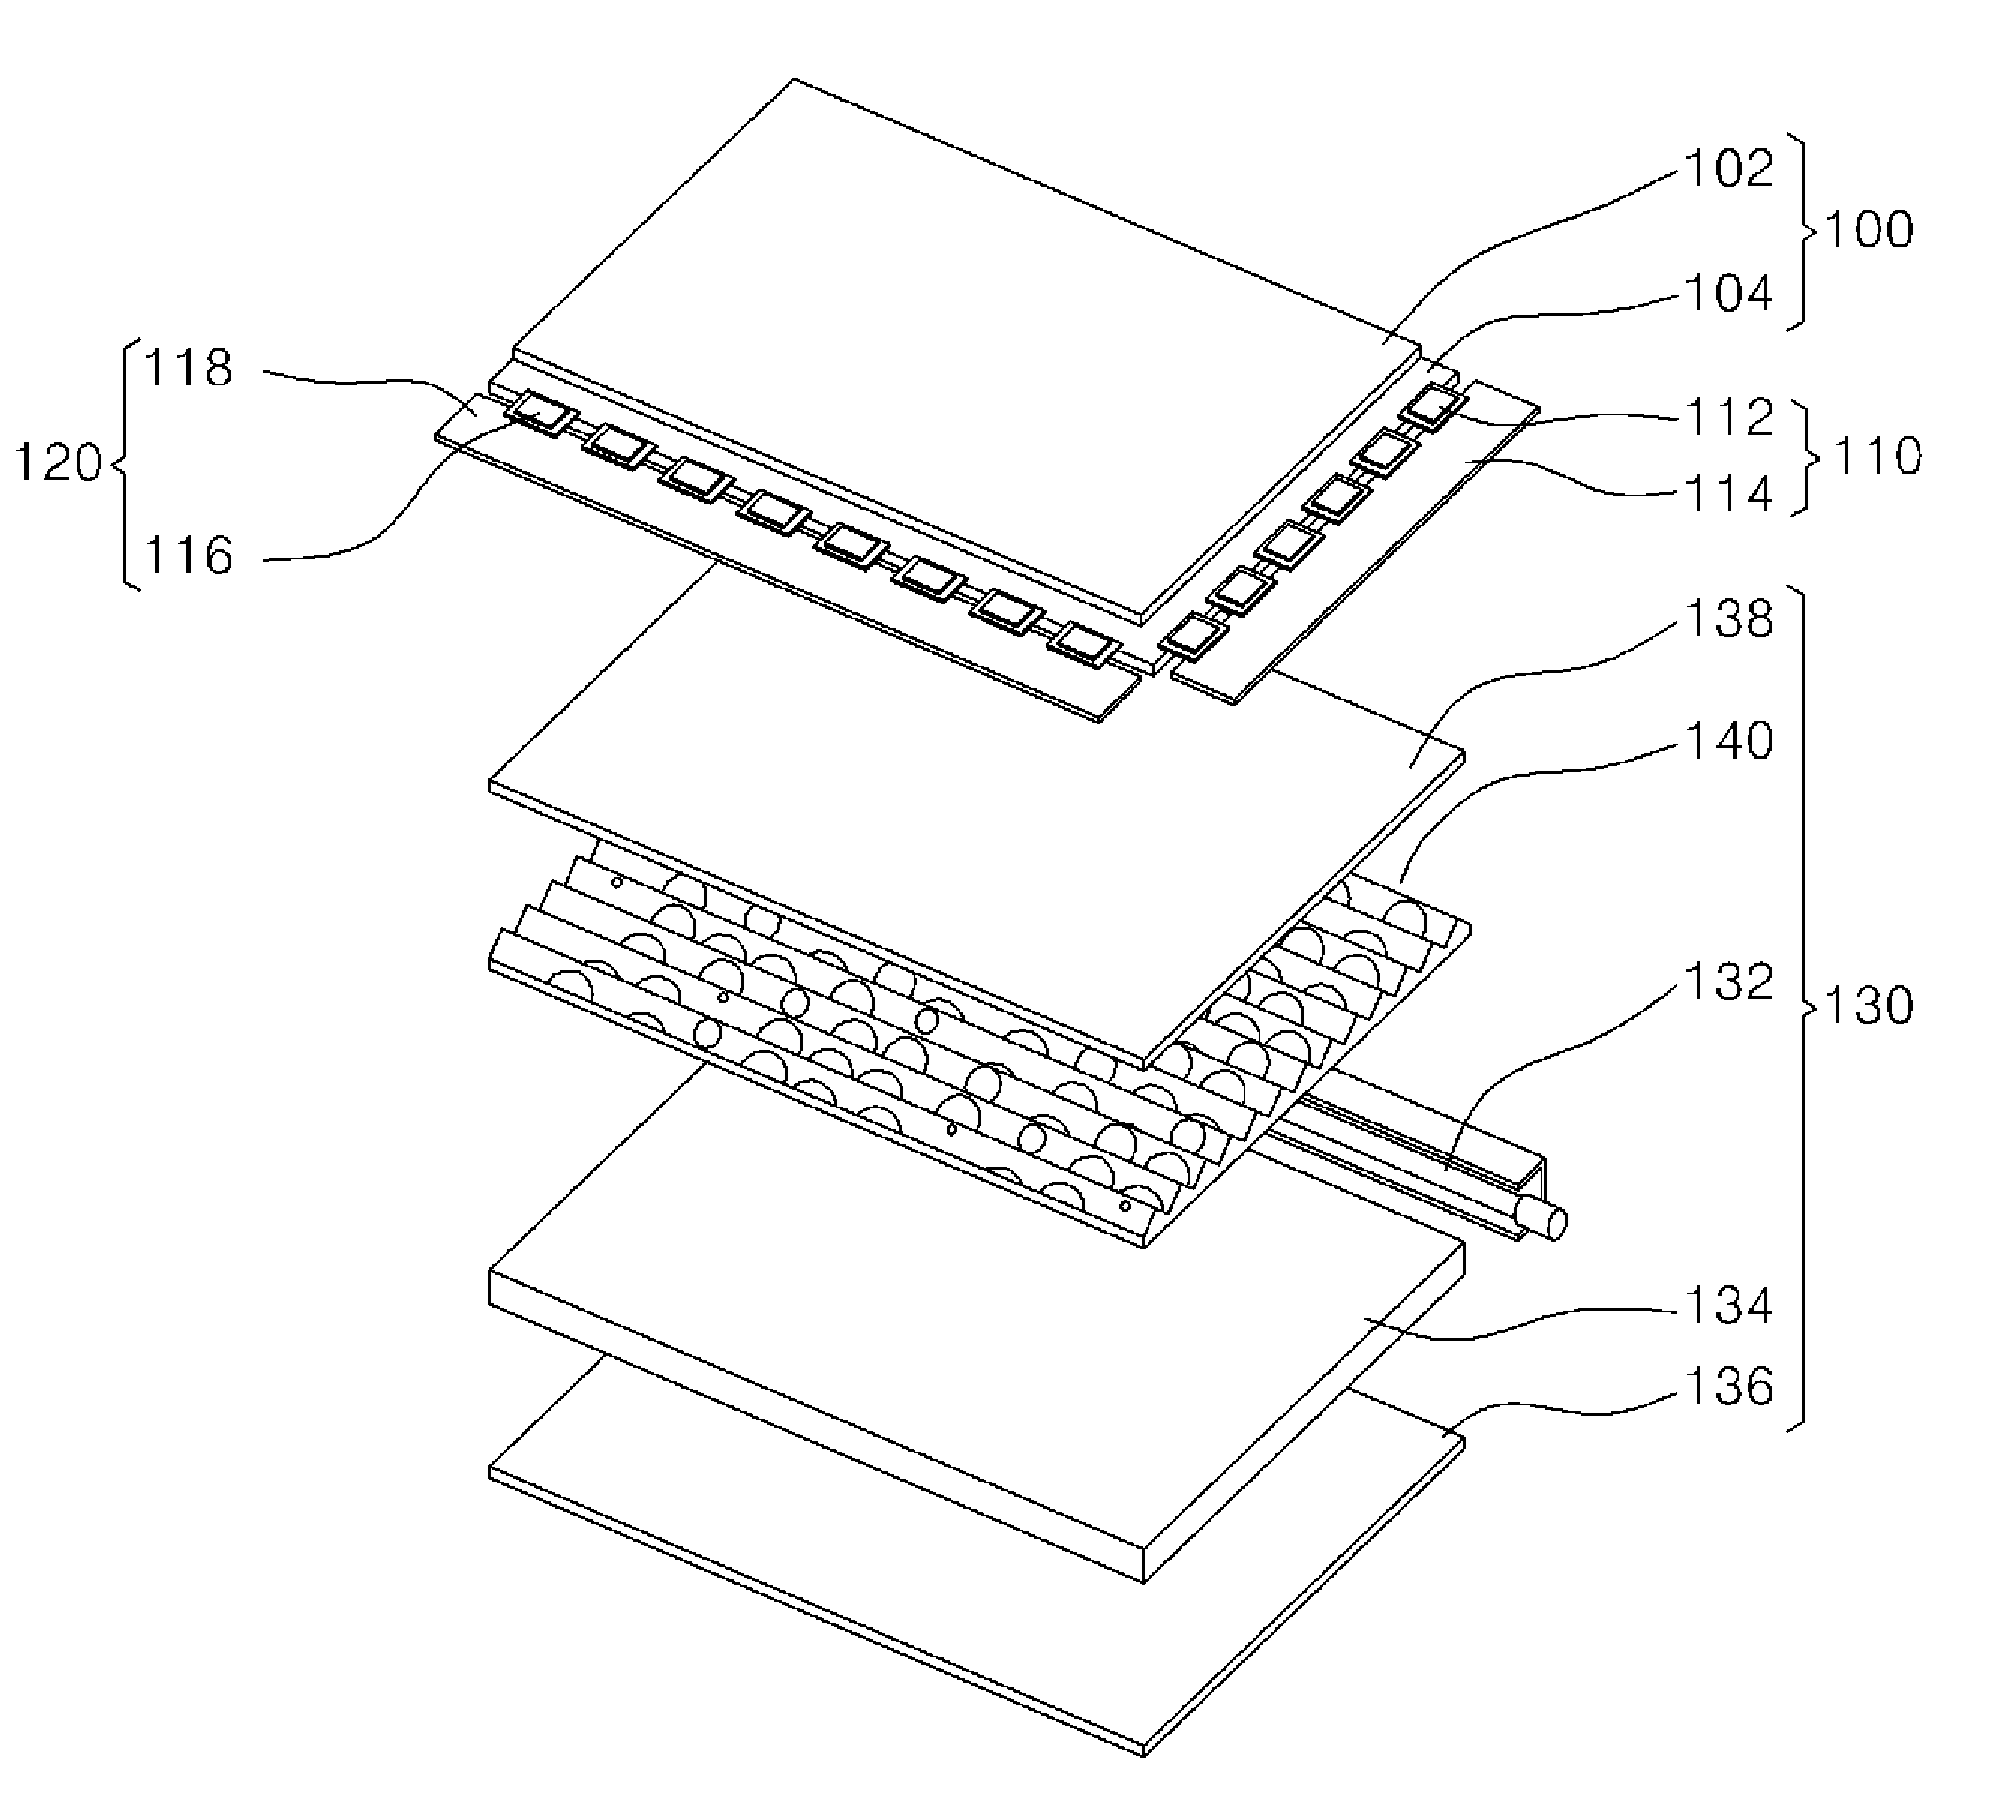 Method for fabricating an optical sheet